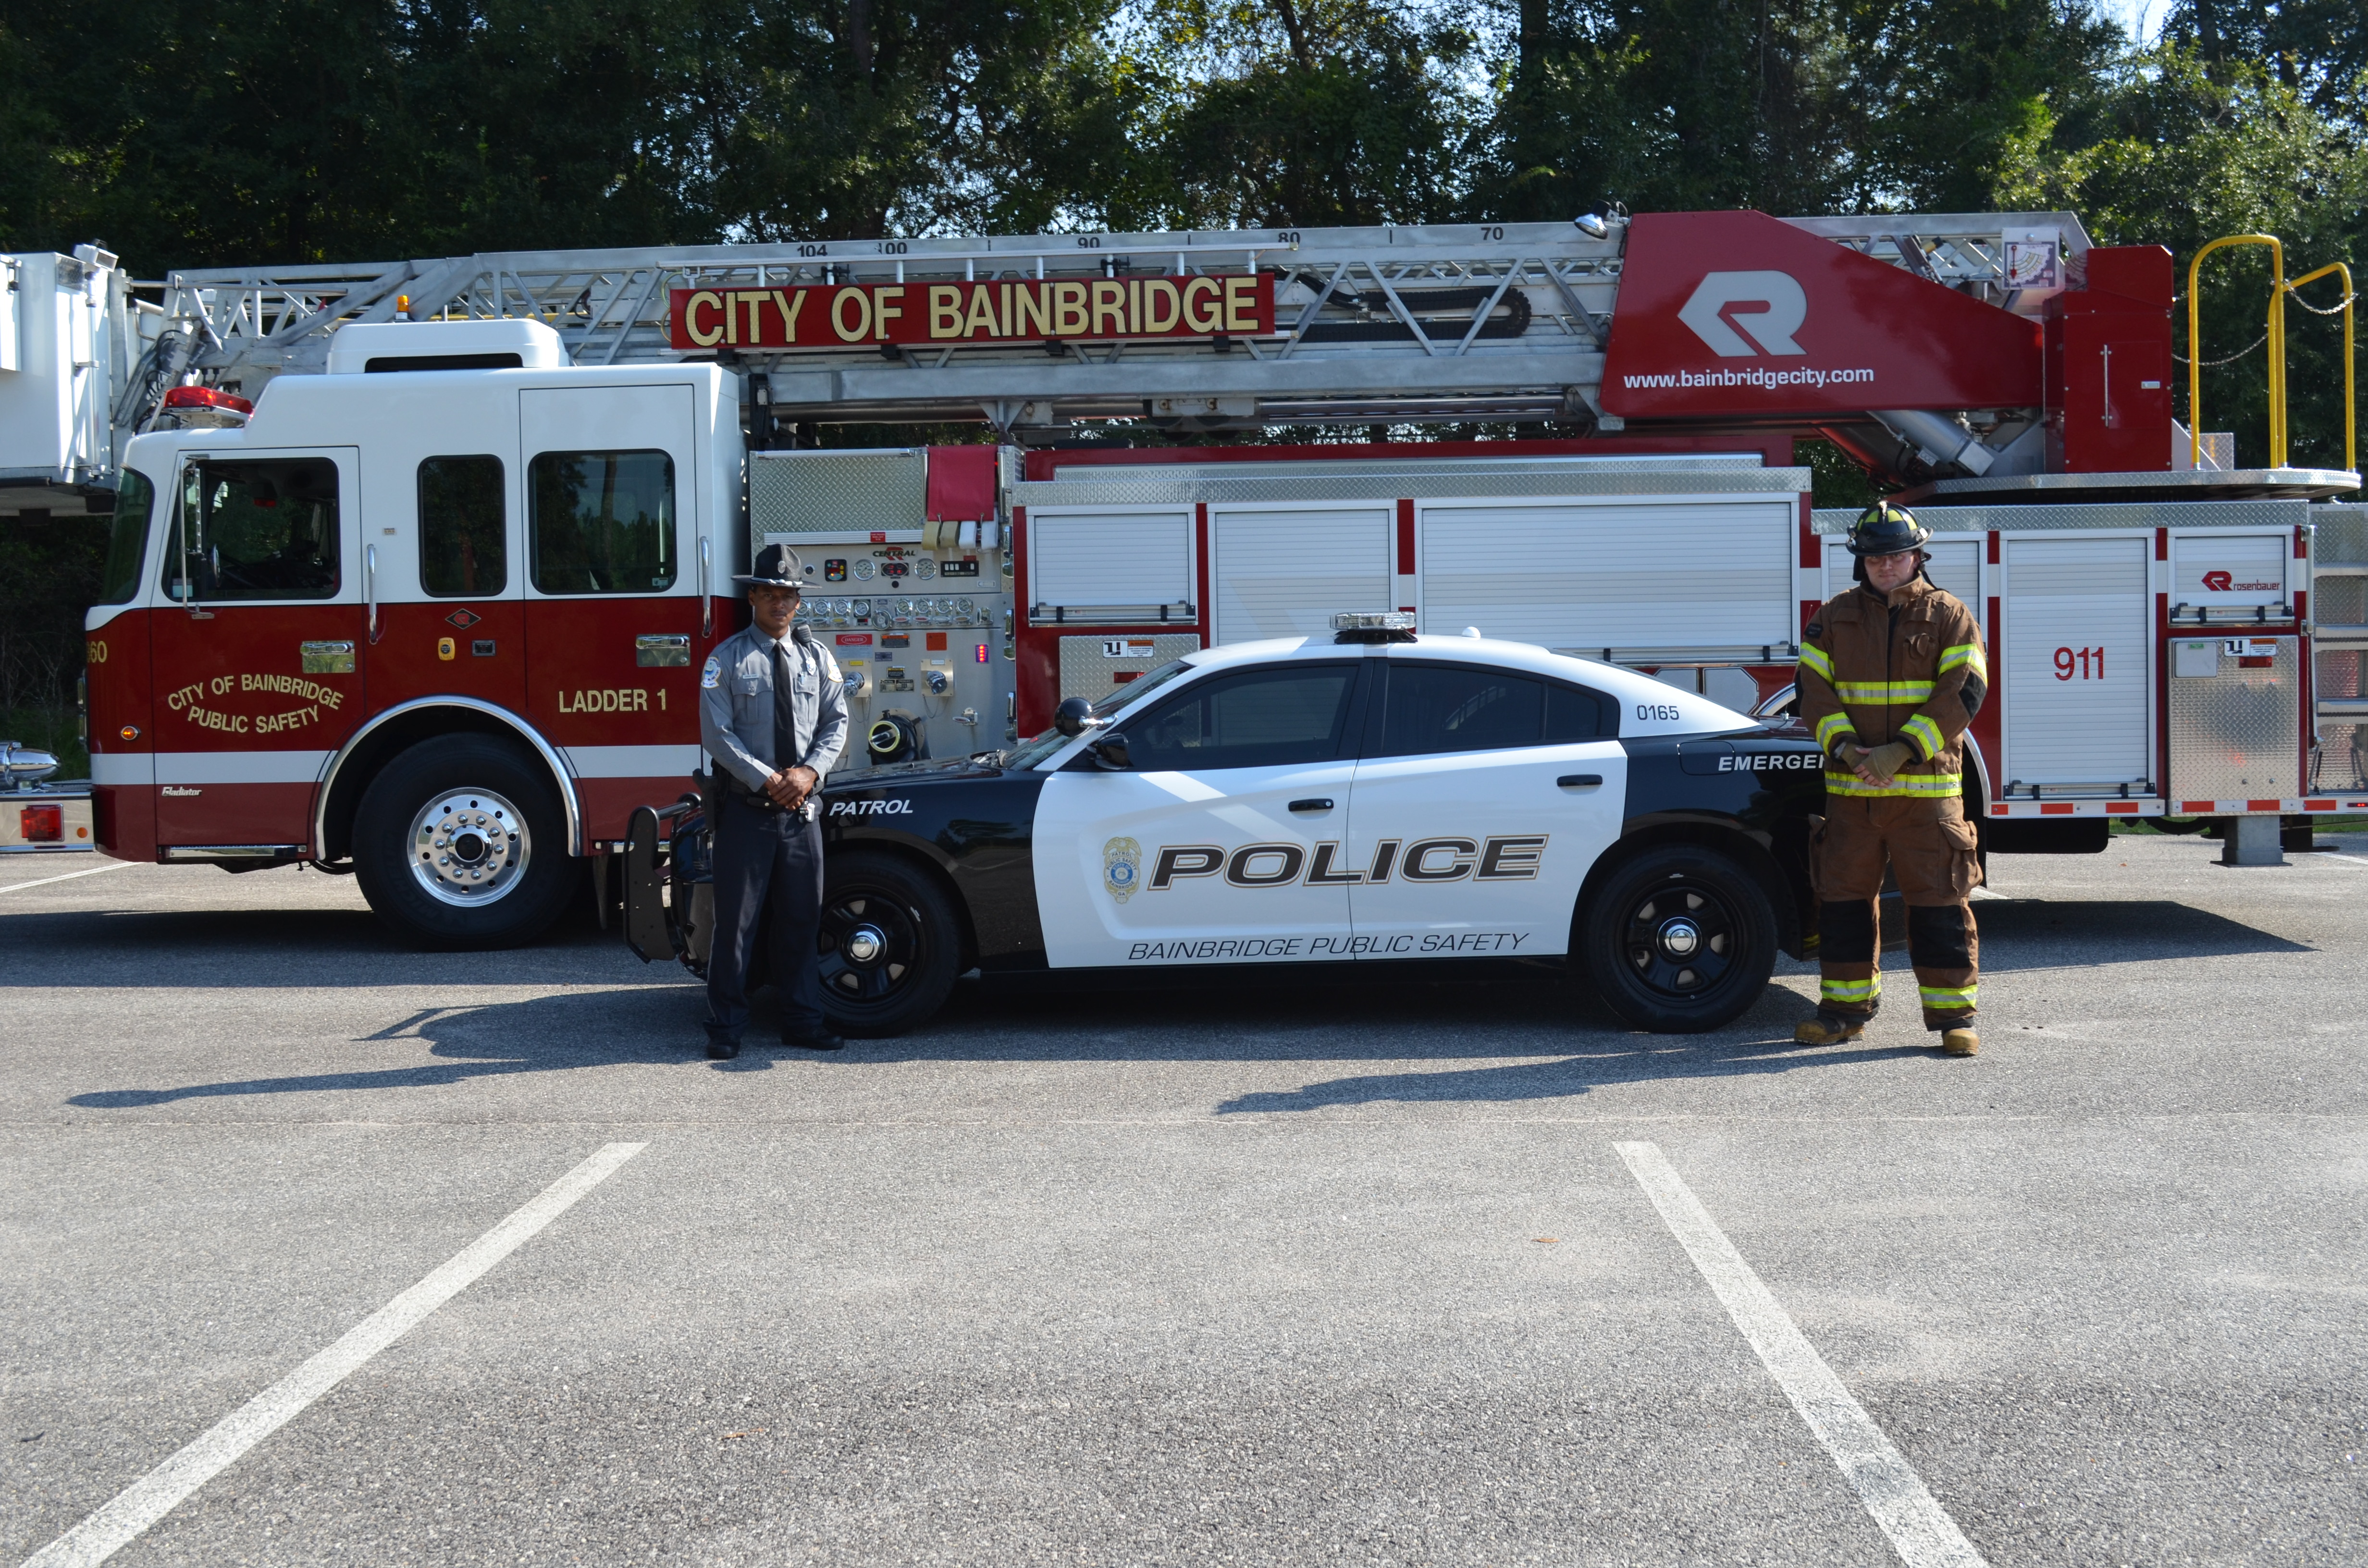 Bainbridge Public Safety Department, GA 